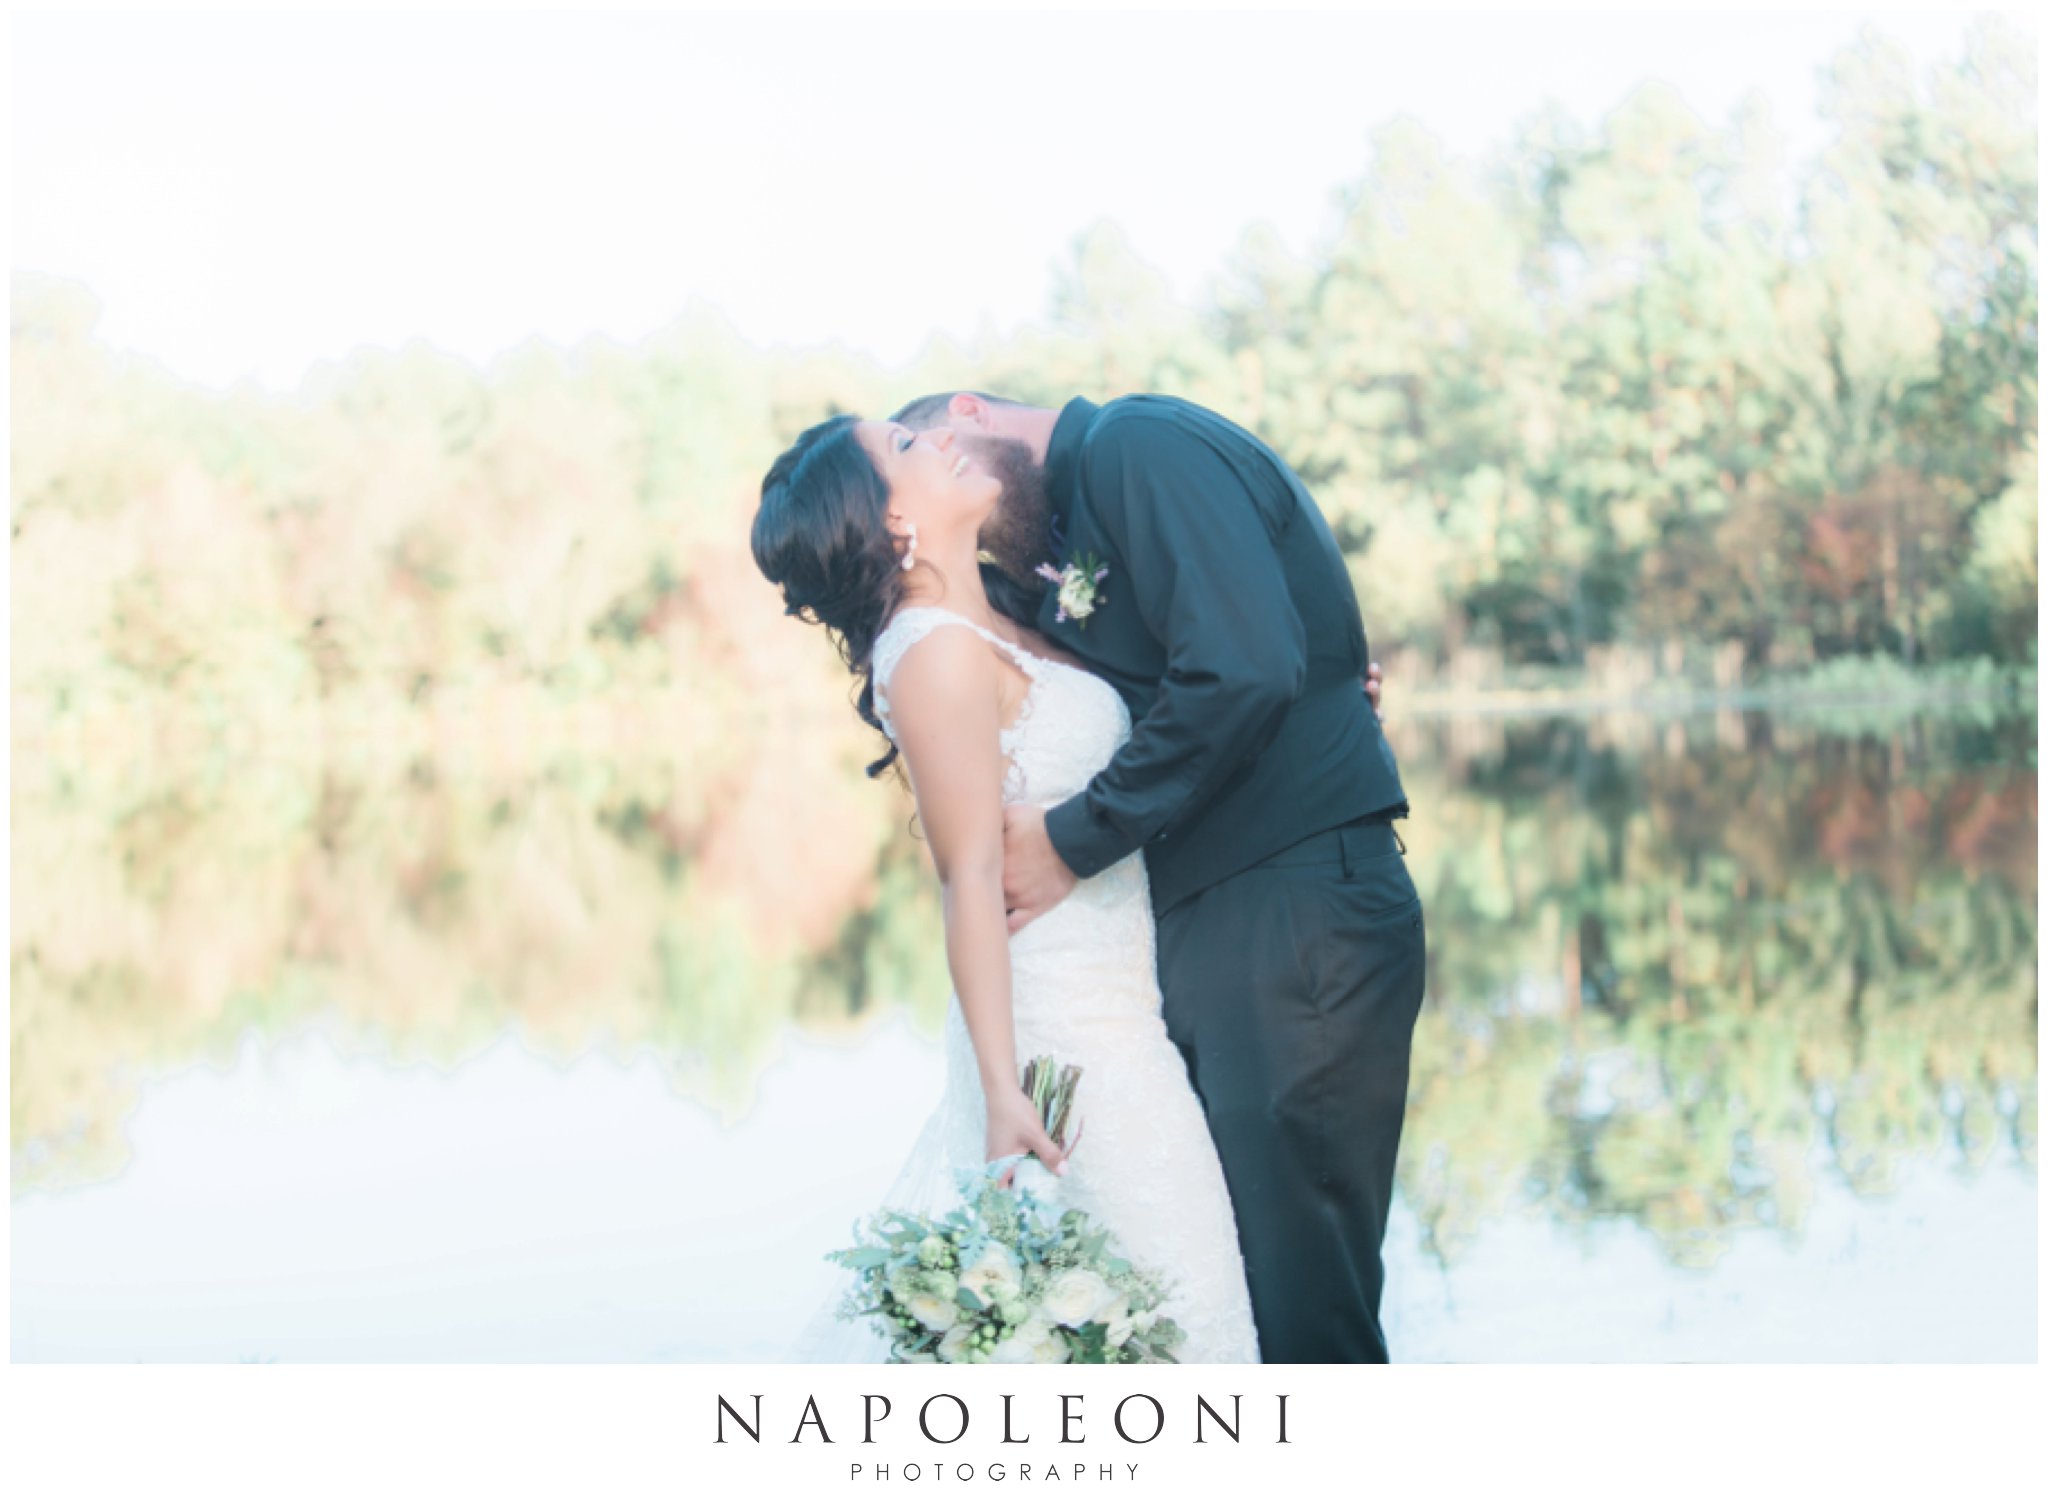 napoleoni-photography_0149